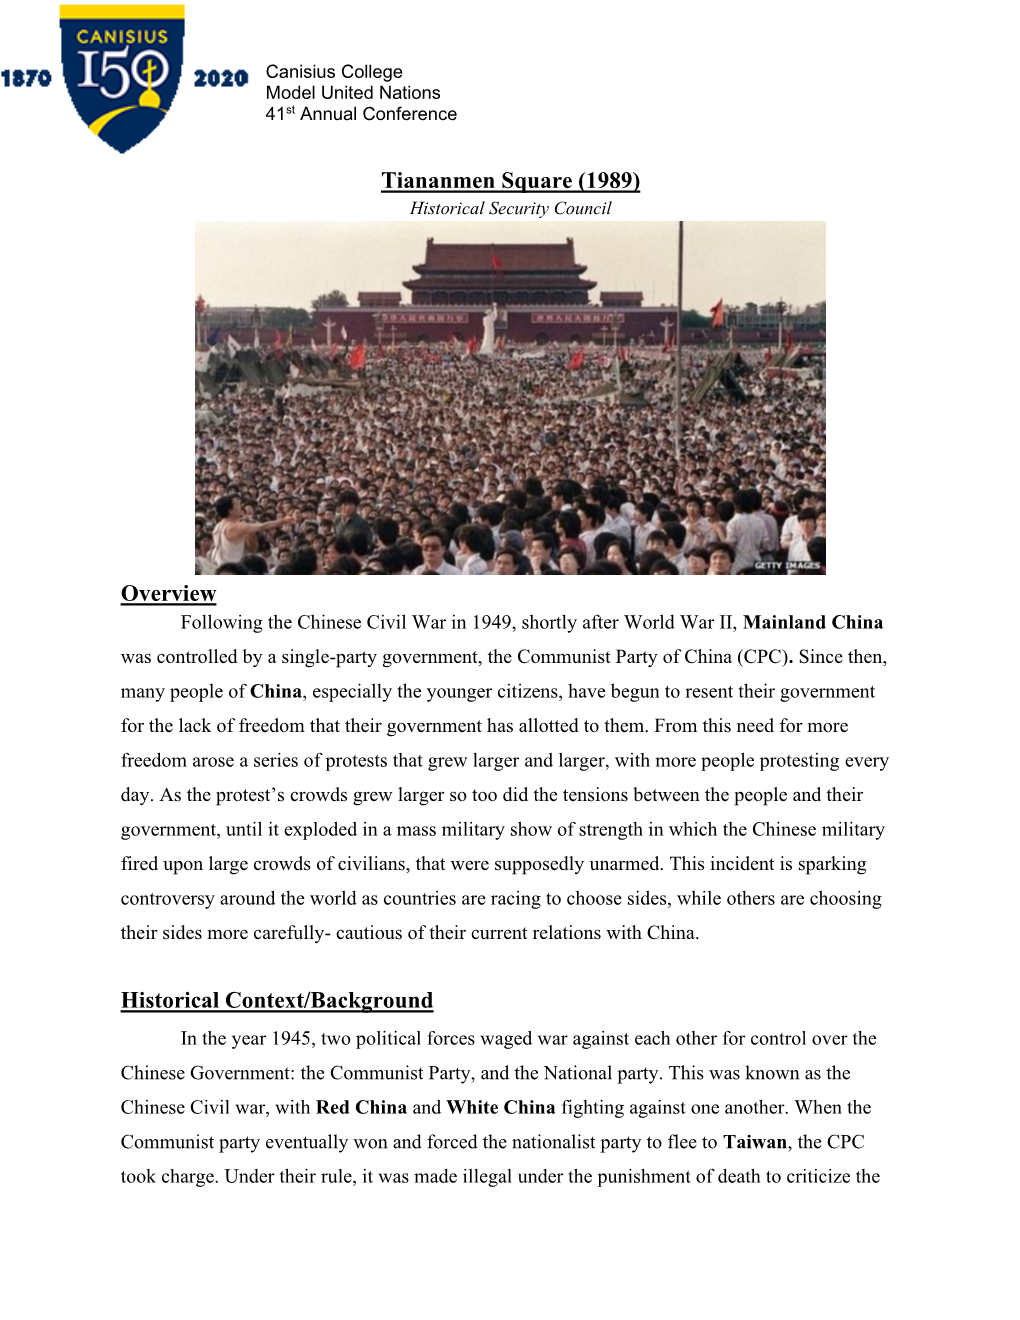 Tiananmen Square (1989) Historical Security Council